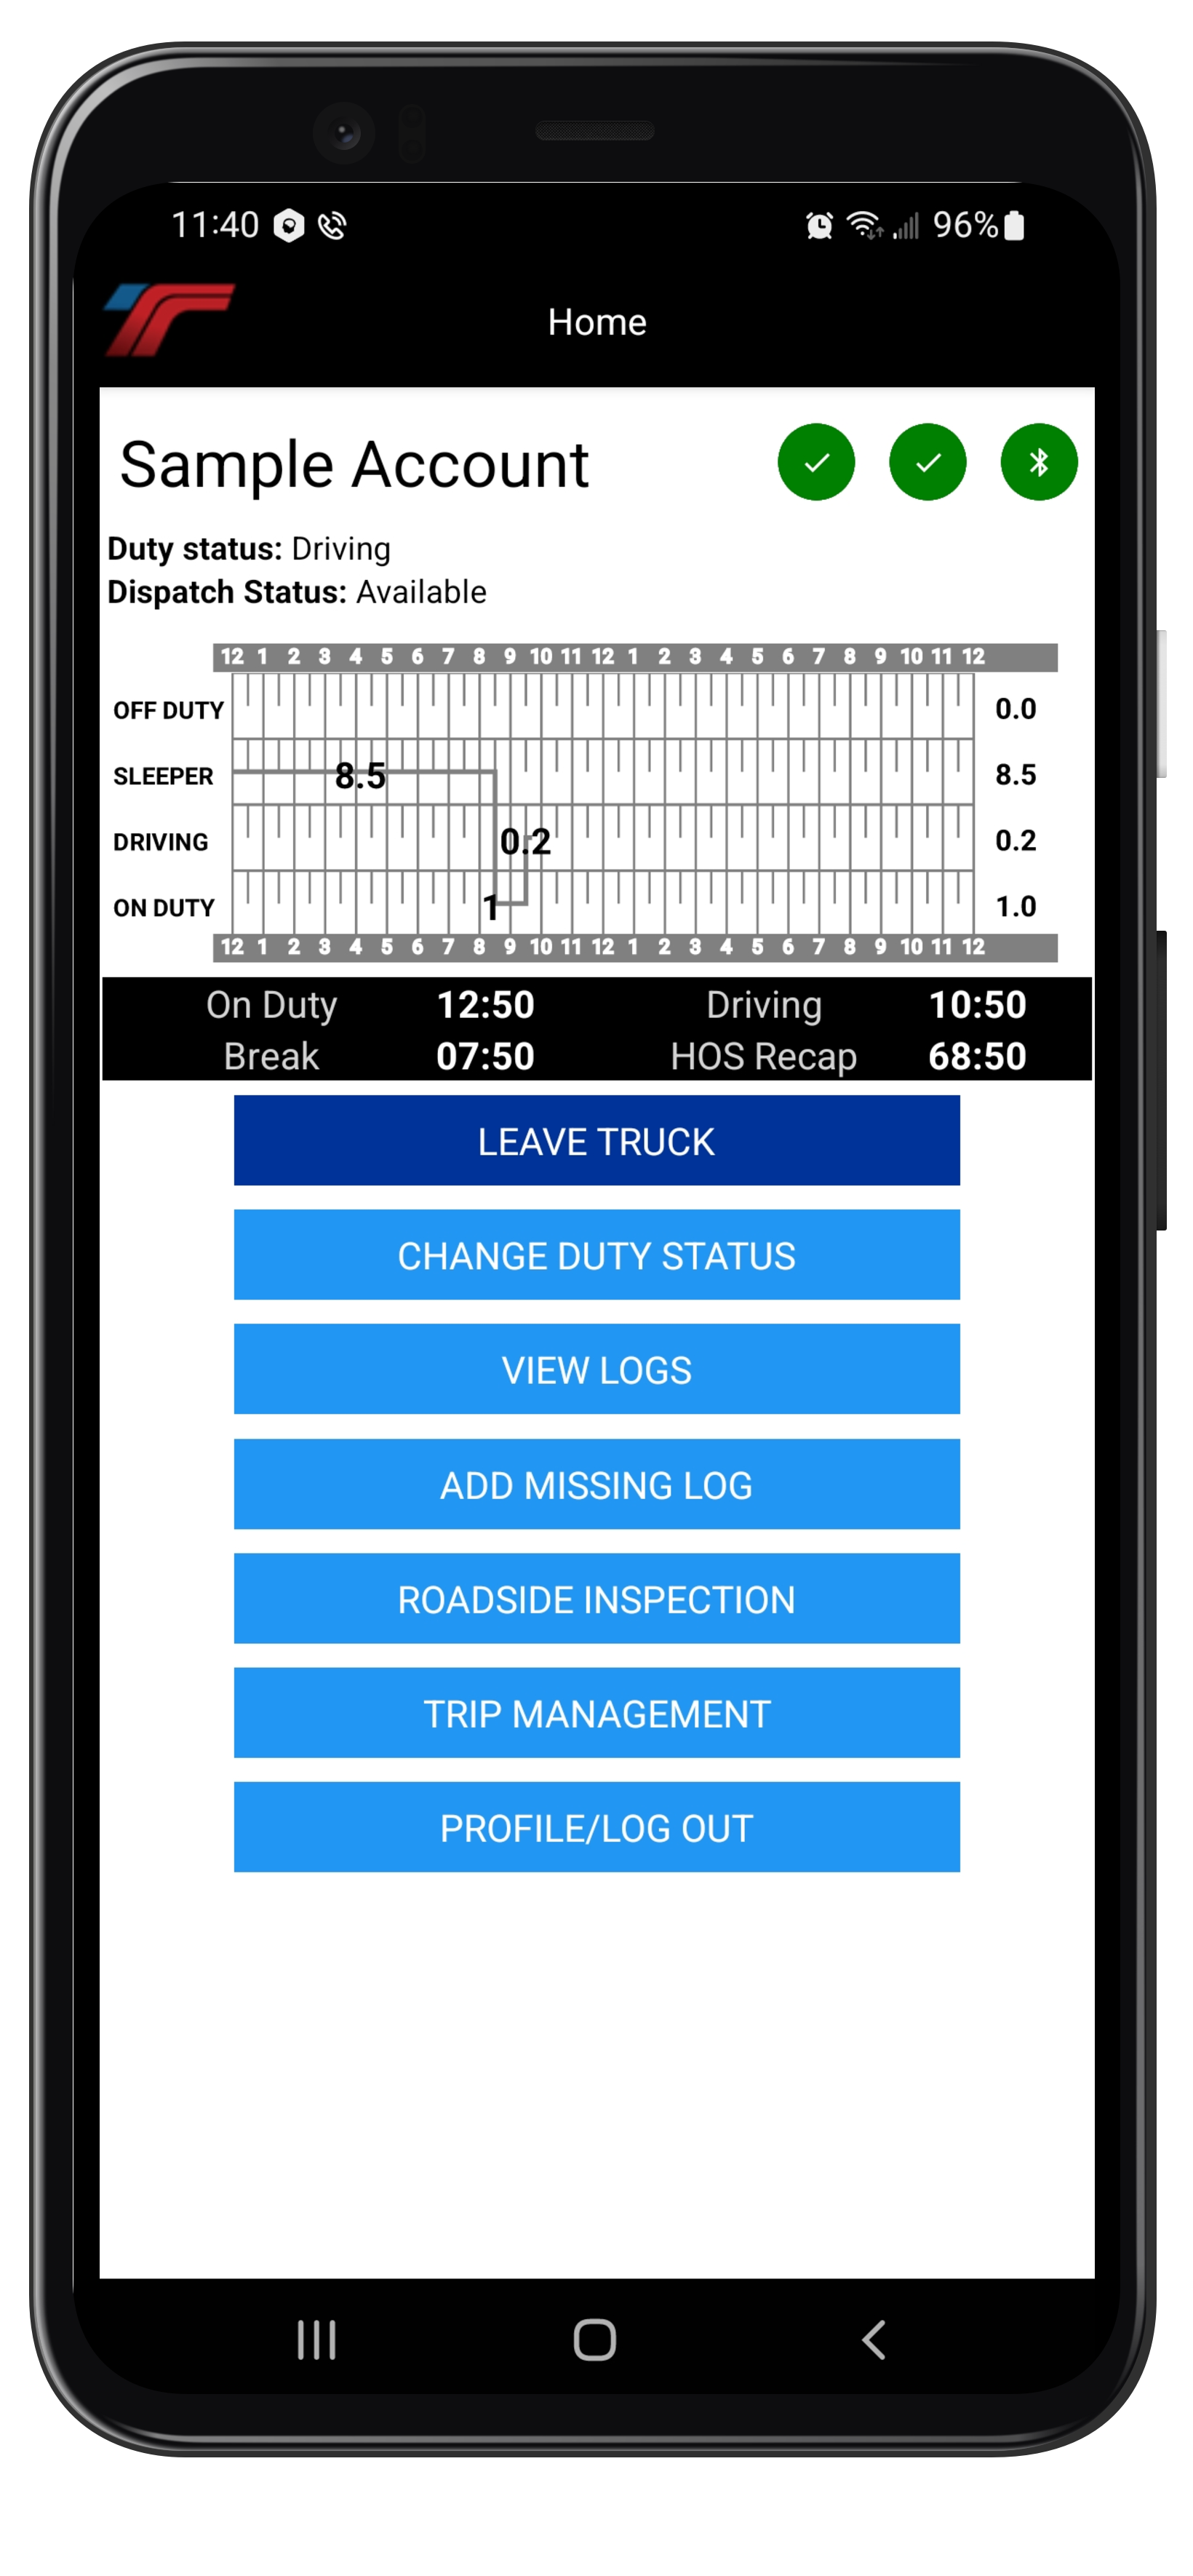 TruckingOffice ELD Mobile app dashboard